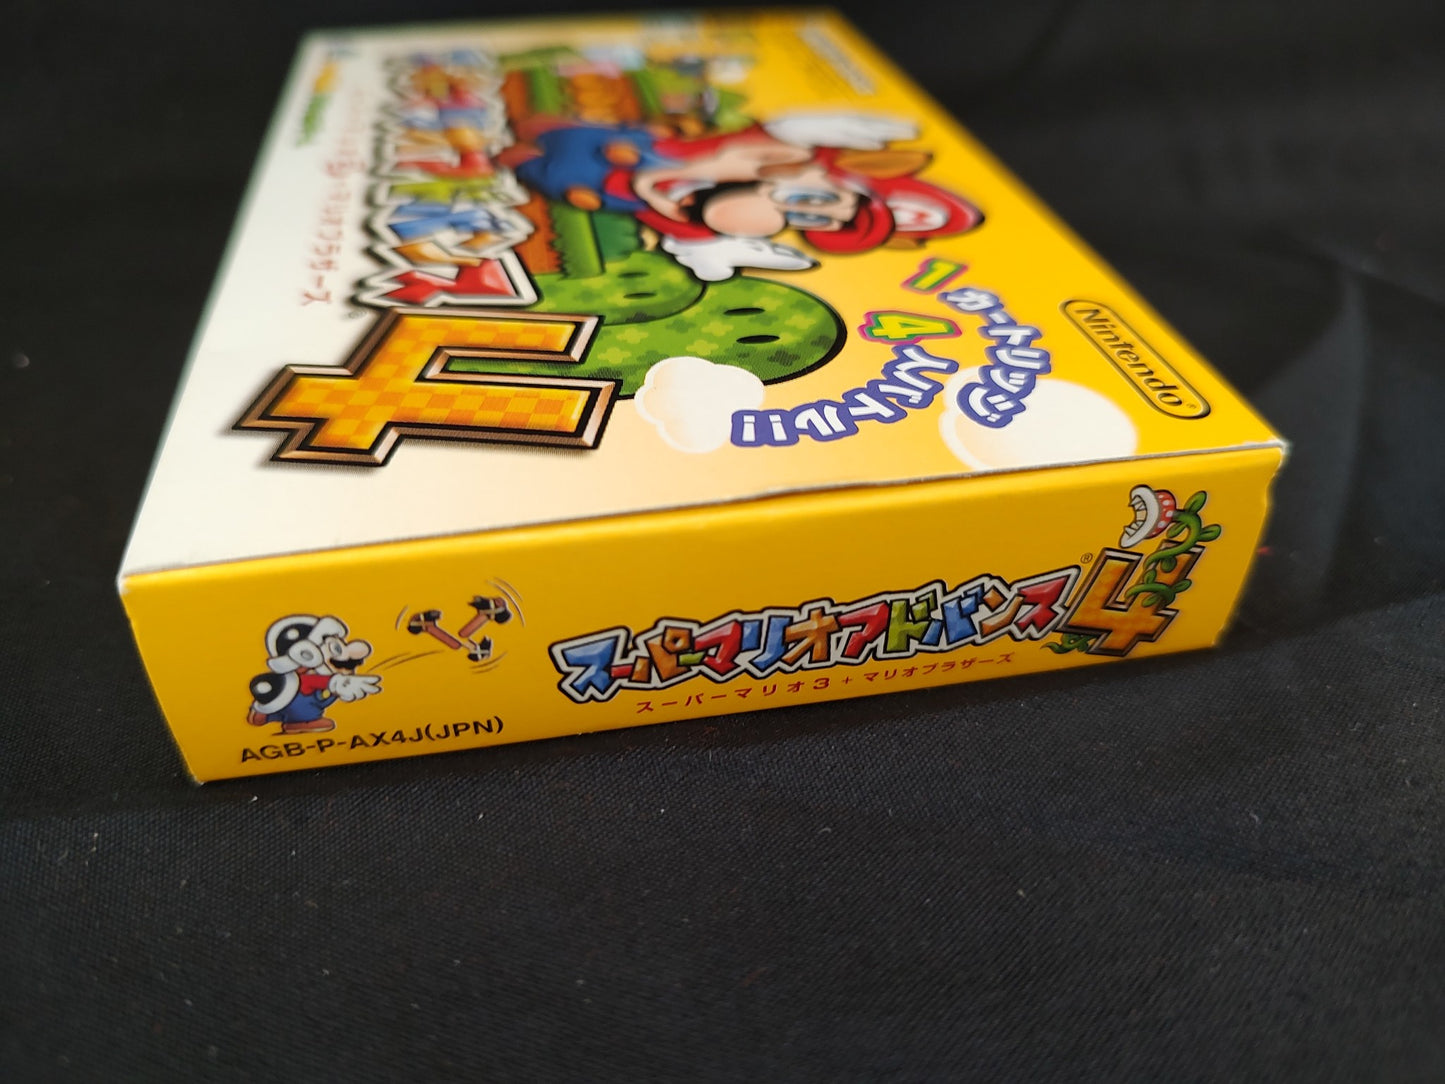 Super Mario Advance 4 Mario3 and Mario Bro. Gameboy Advance GBA, working-f0728-